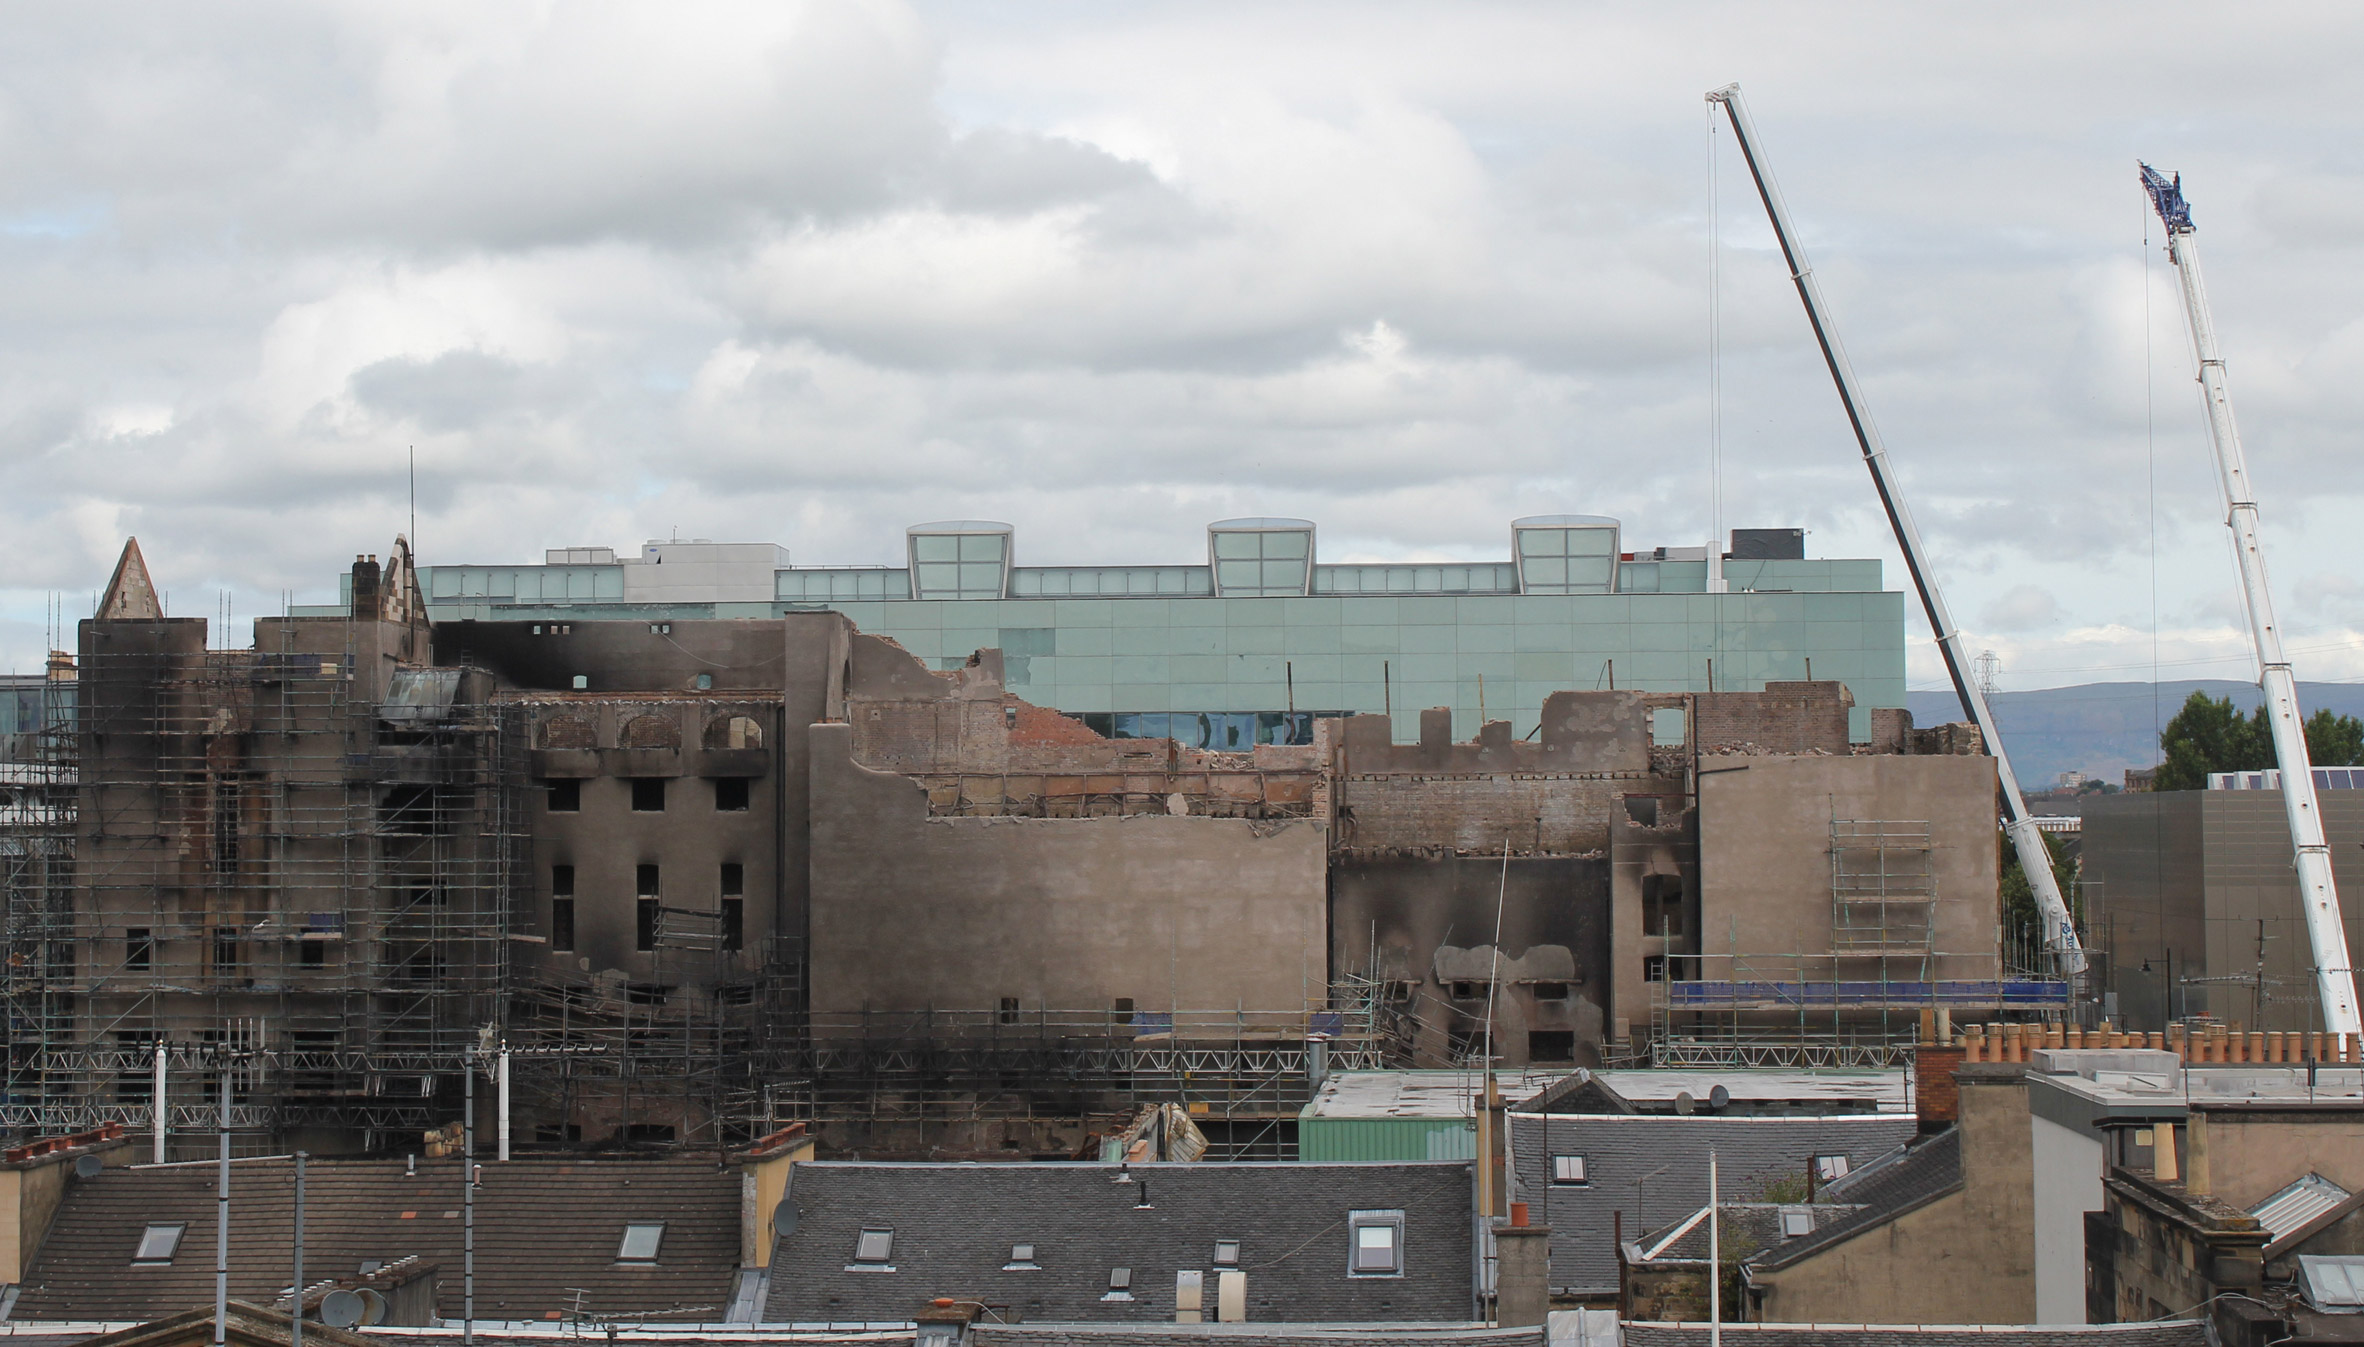 Glasgow School of Art repairs